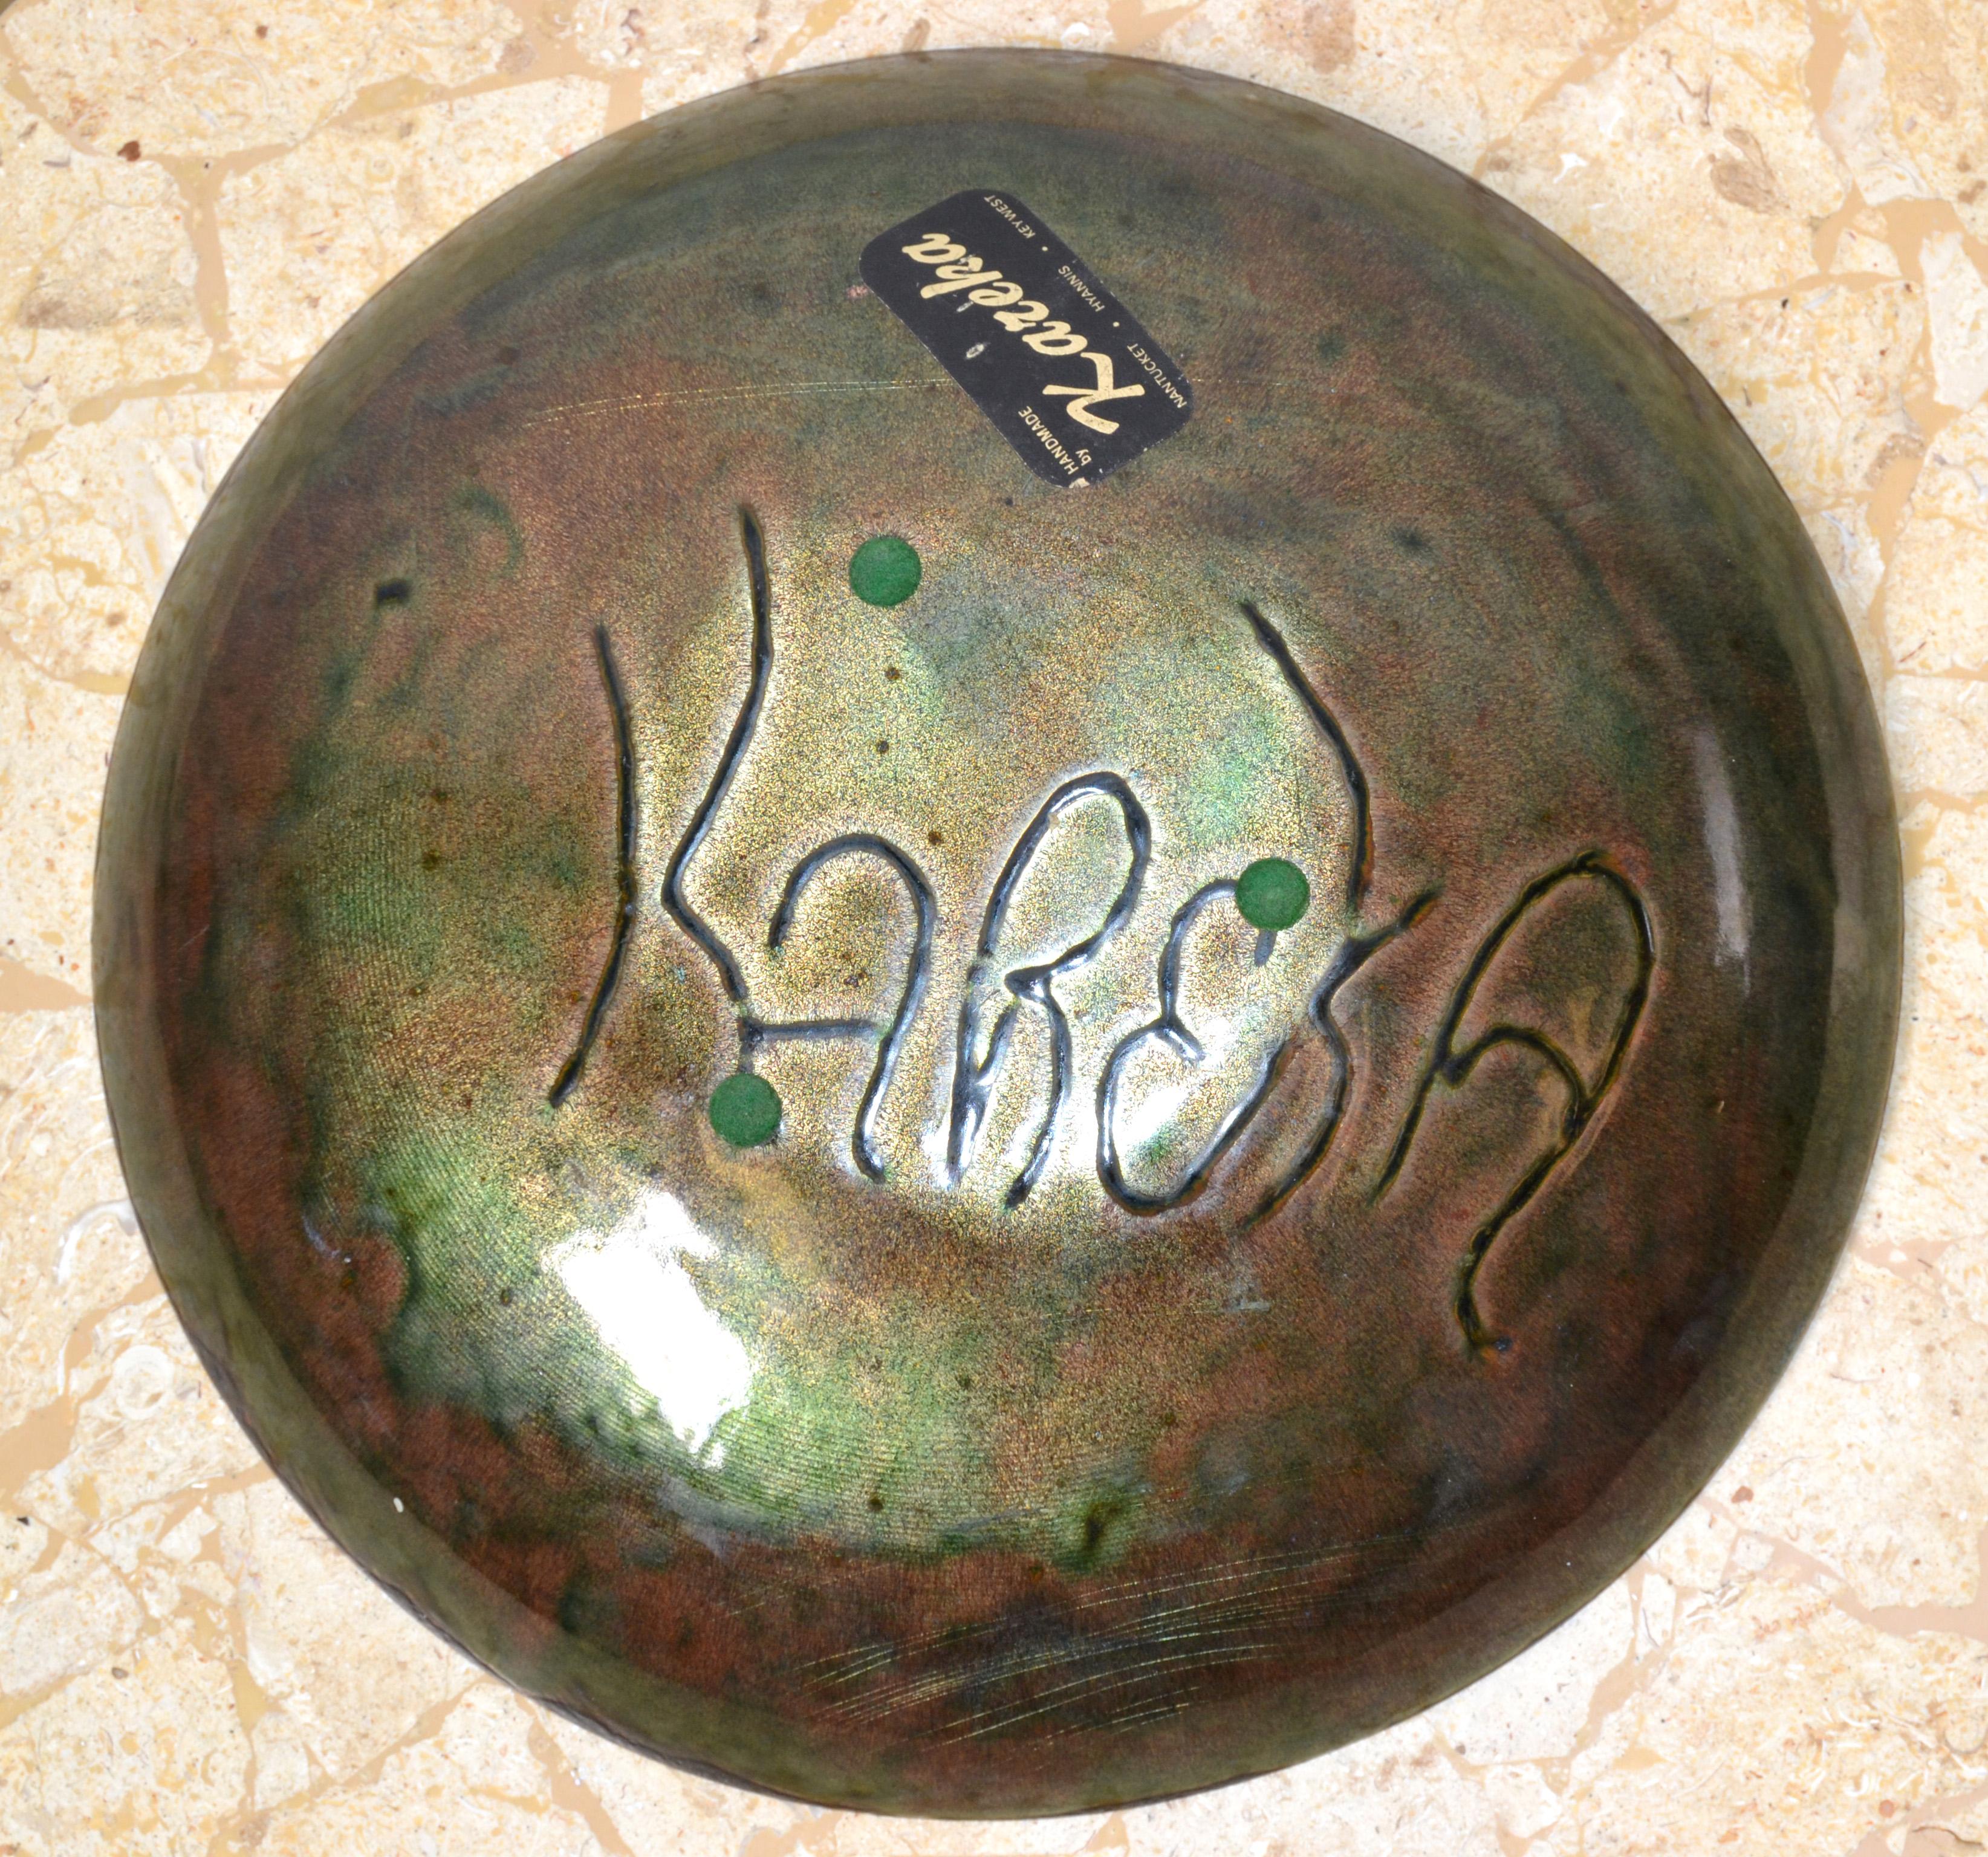 Vintage Kareka Enamel Over Copper Decorative Bowl, Plate, Centerpiece 2